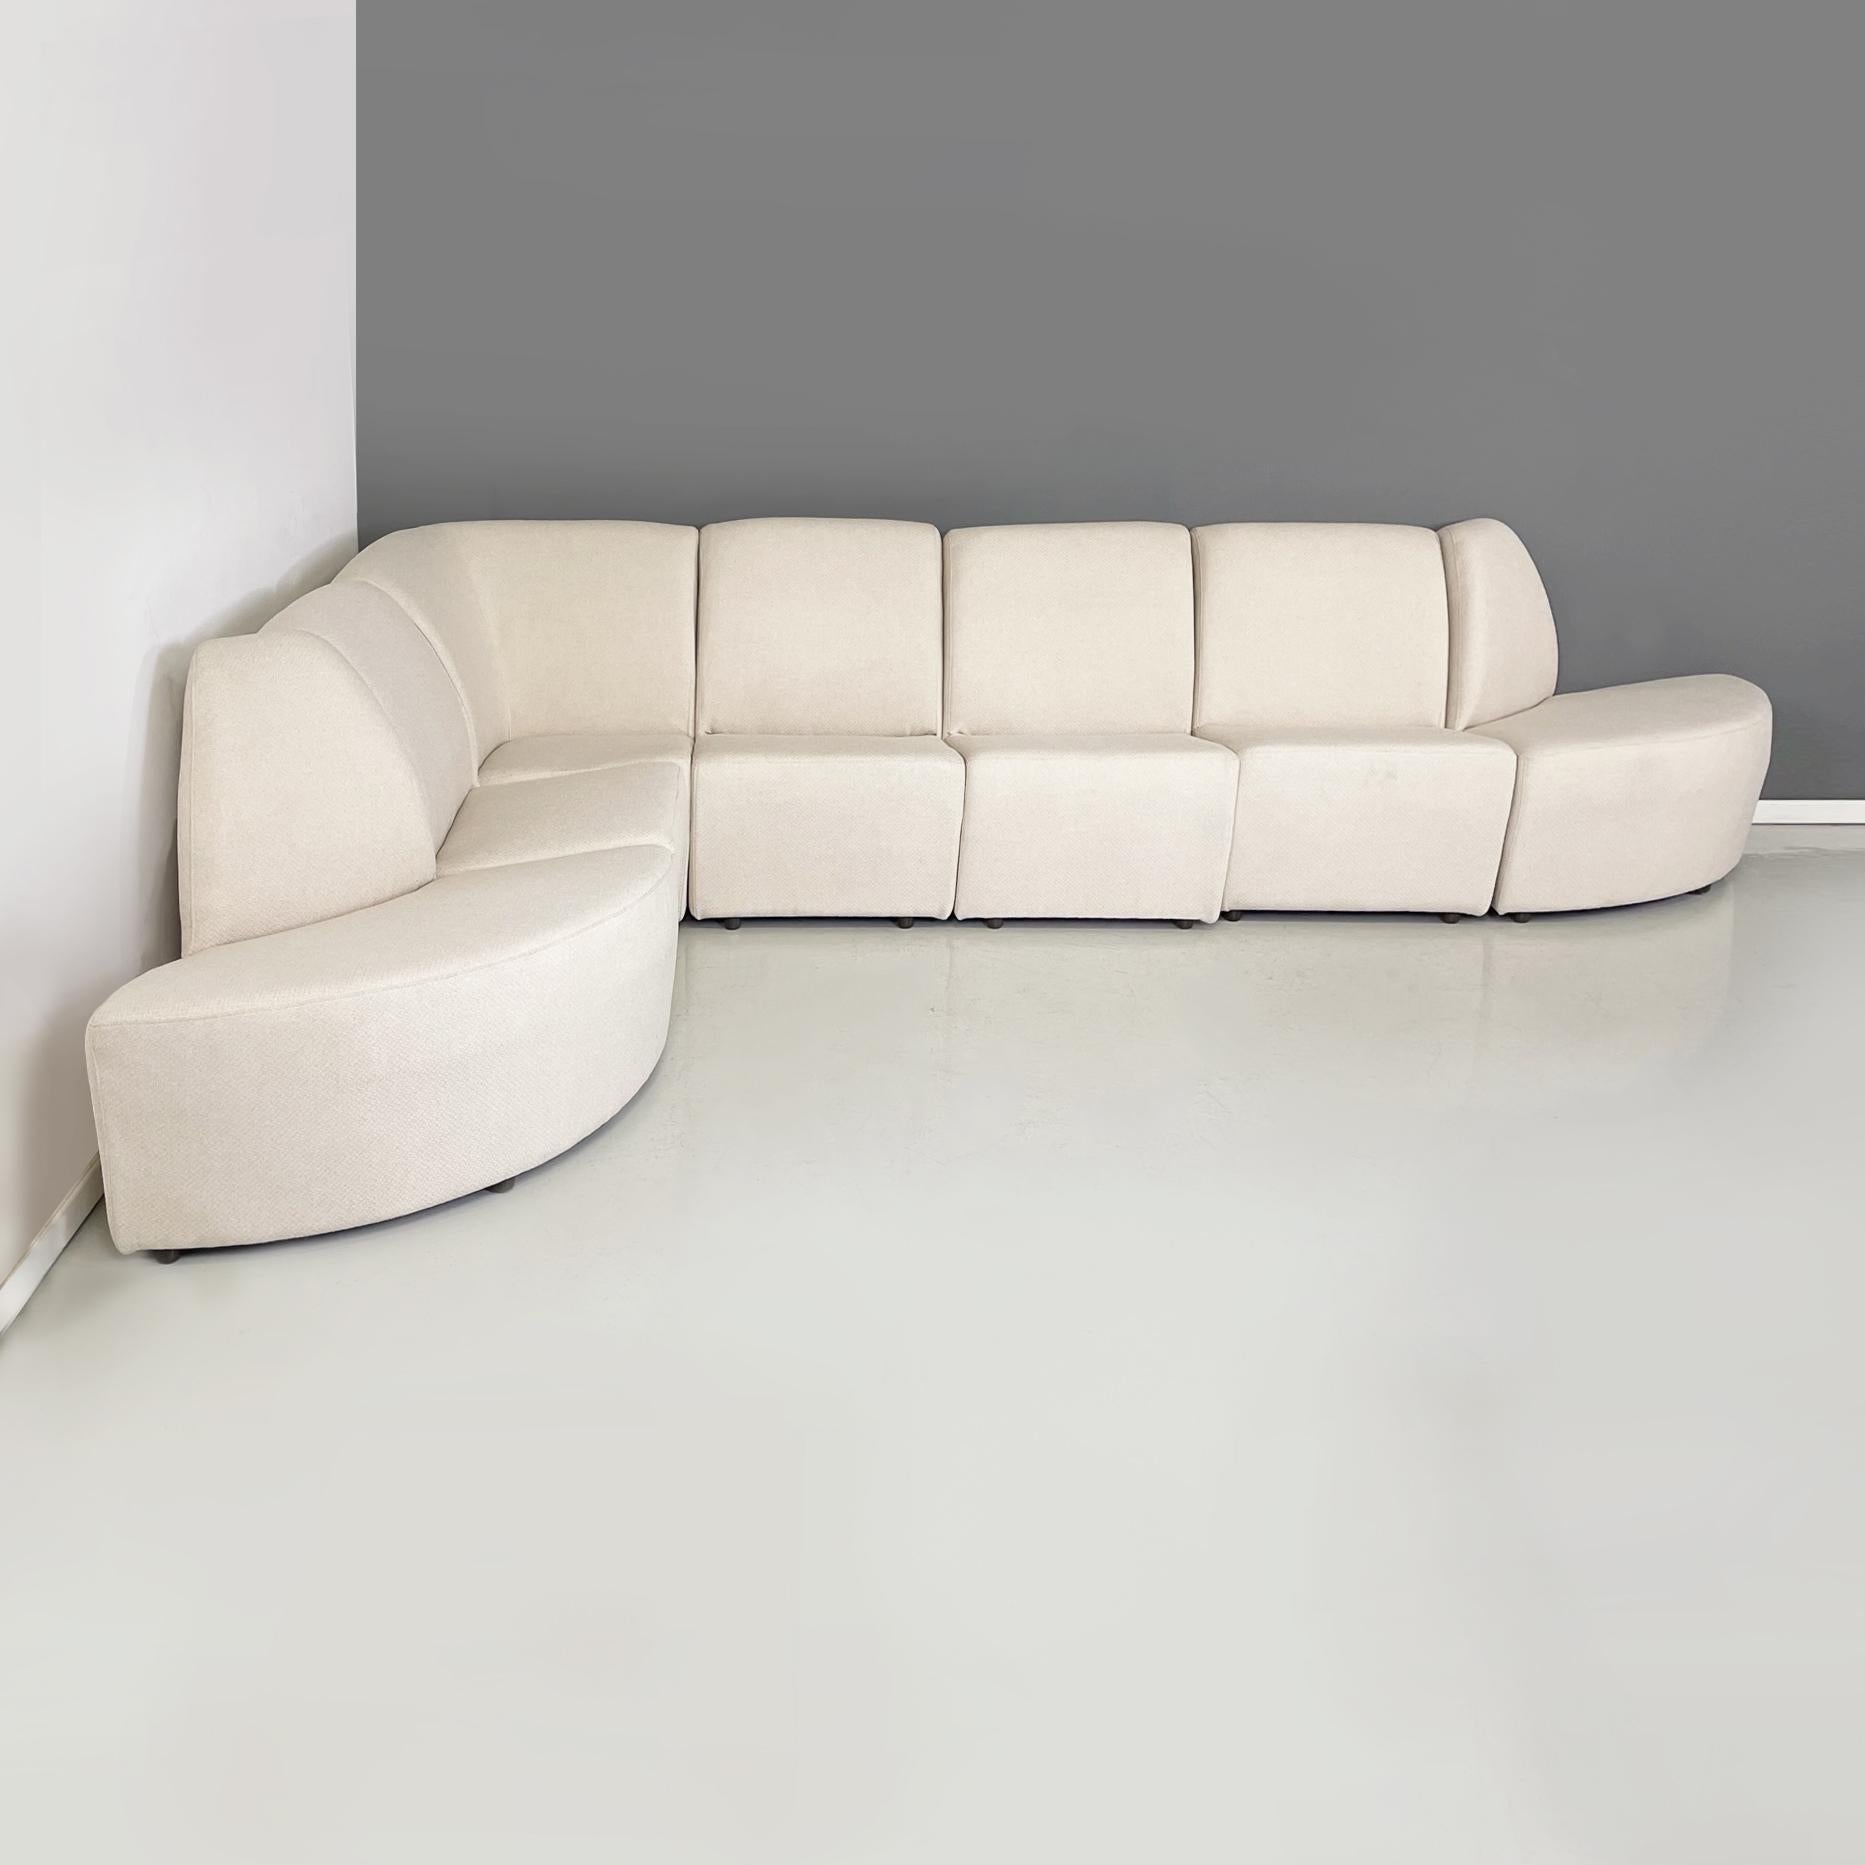 Late 20th Century Italian Modern Modular and Corner Sofa in White Fabric, 1980s